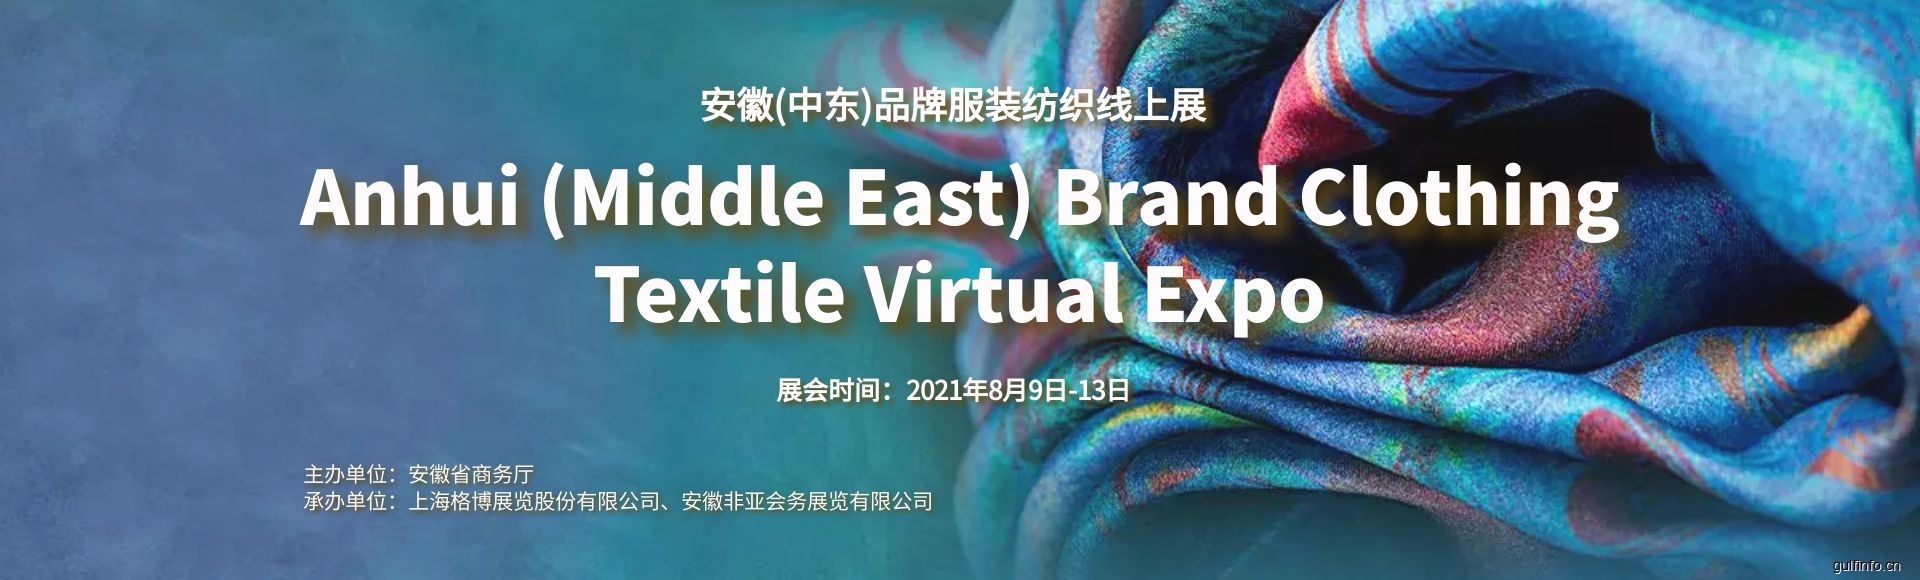 2021安徽(中东)品牌服装<font color=#ff0000>纺织</font>线上展即将启动